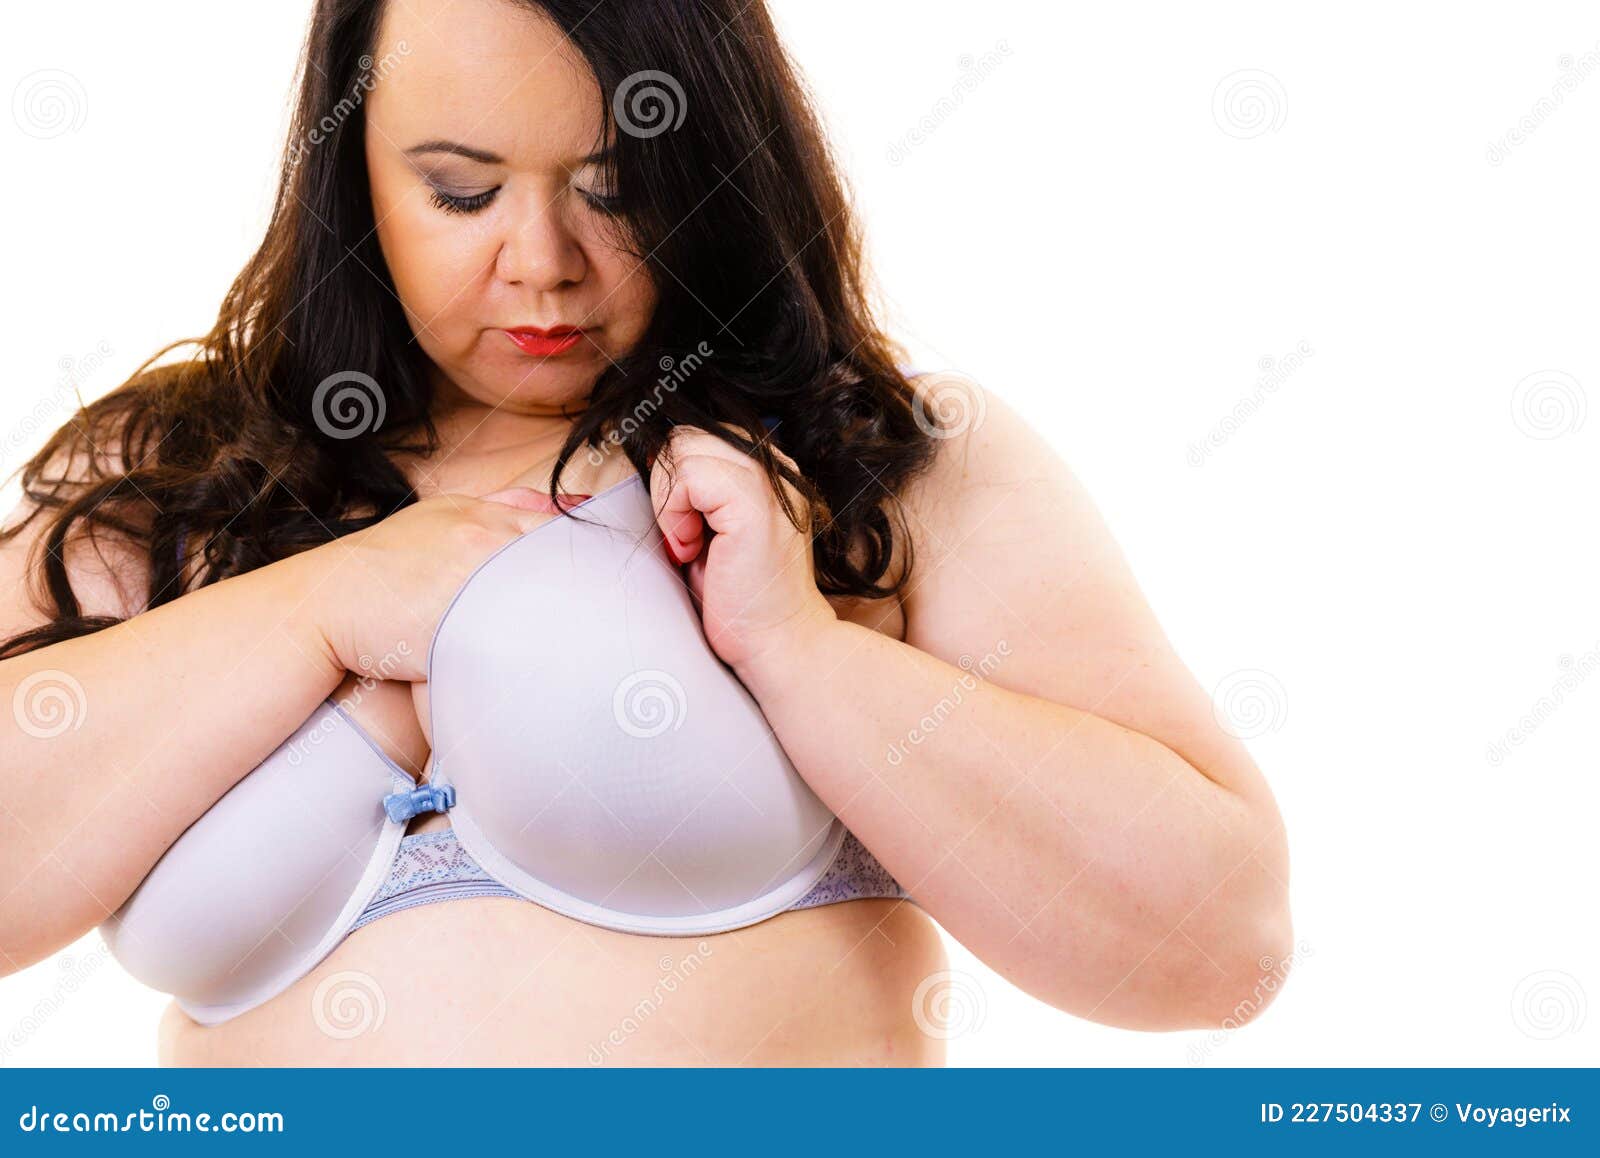 Big Breast White Girls